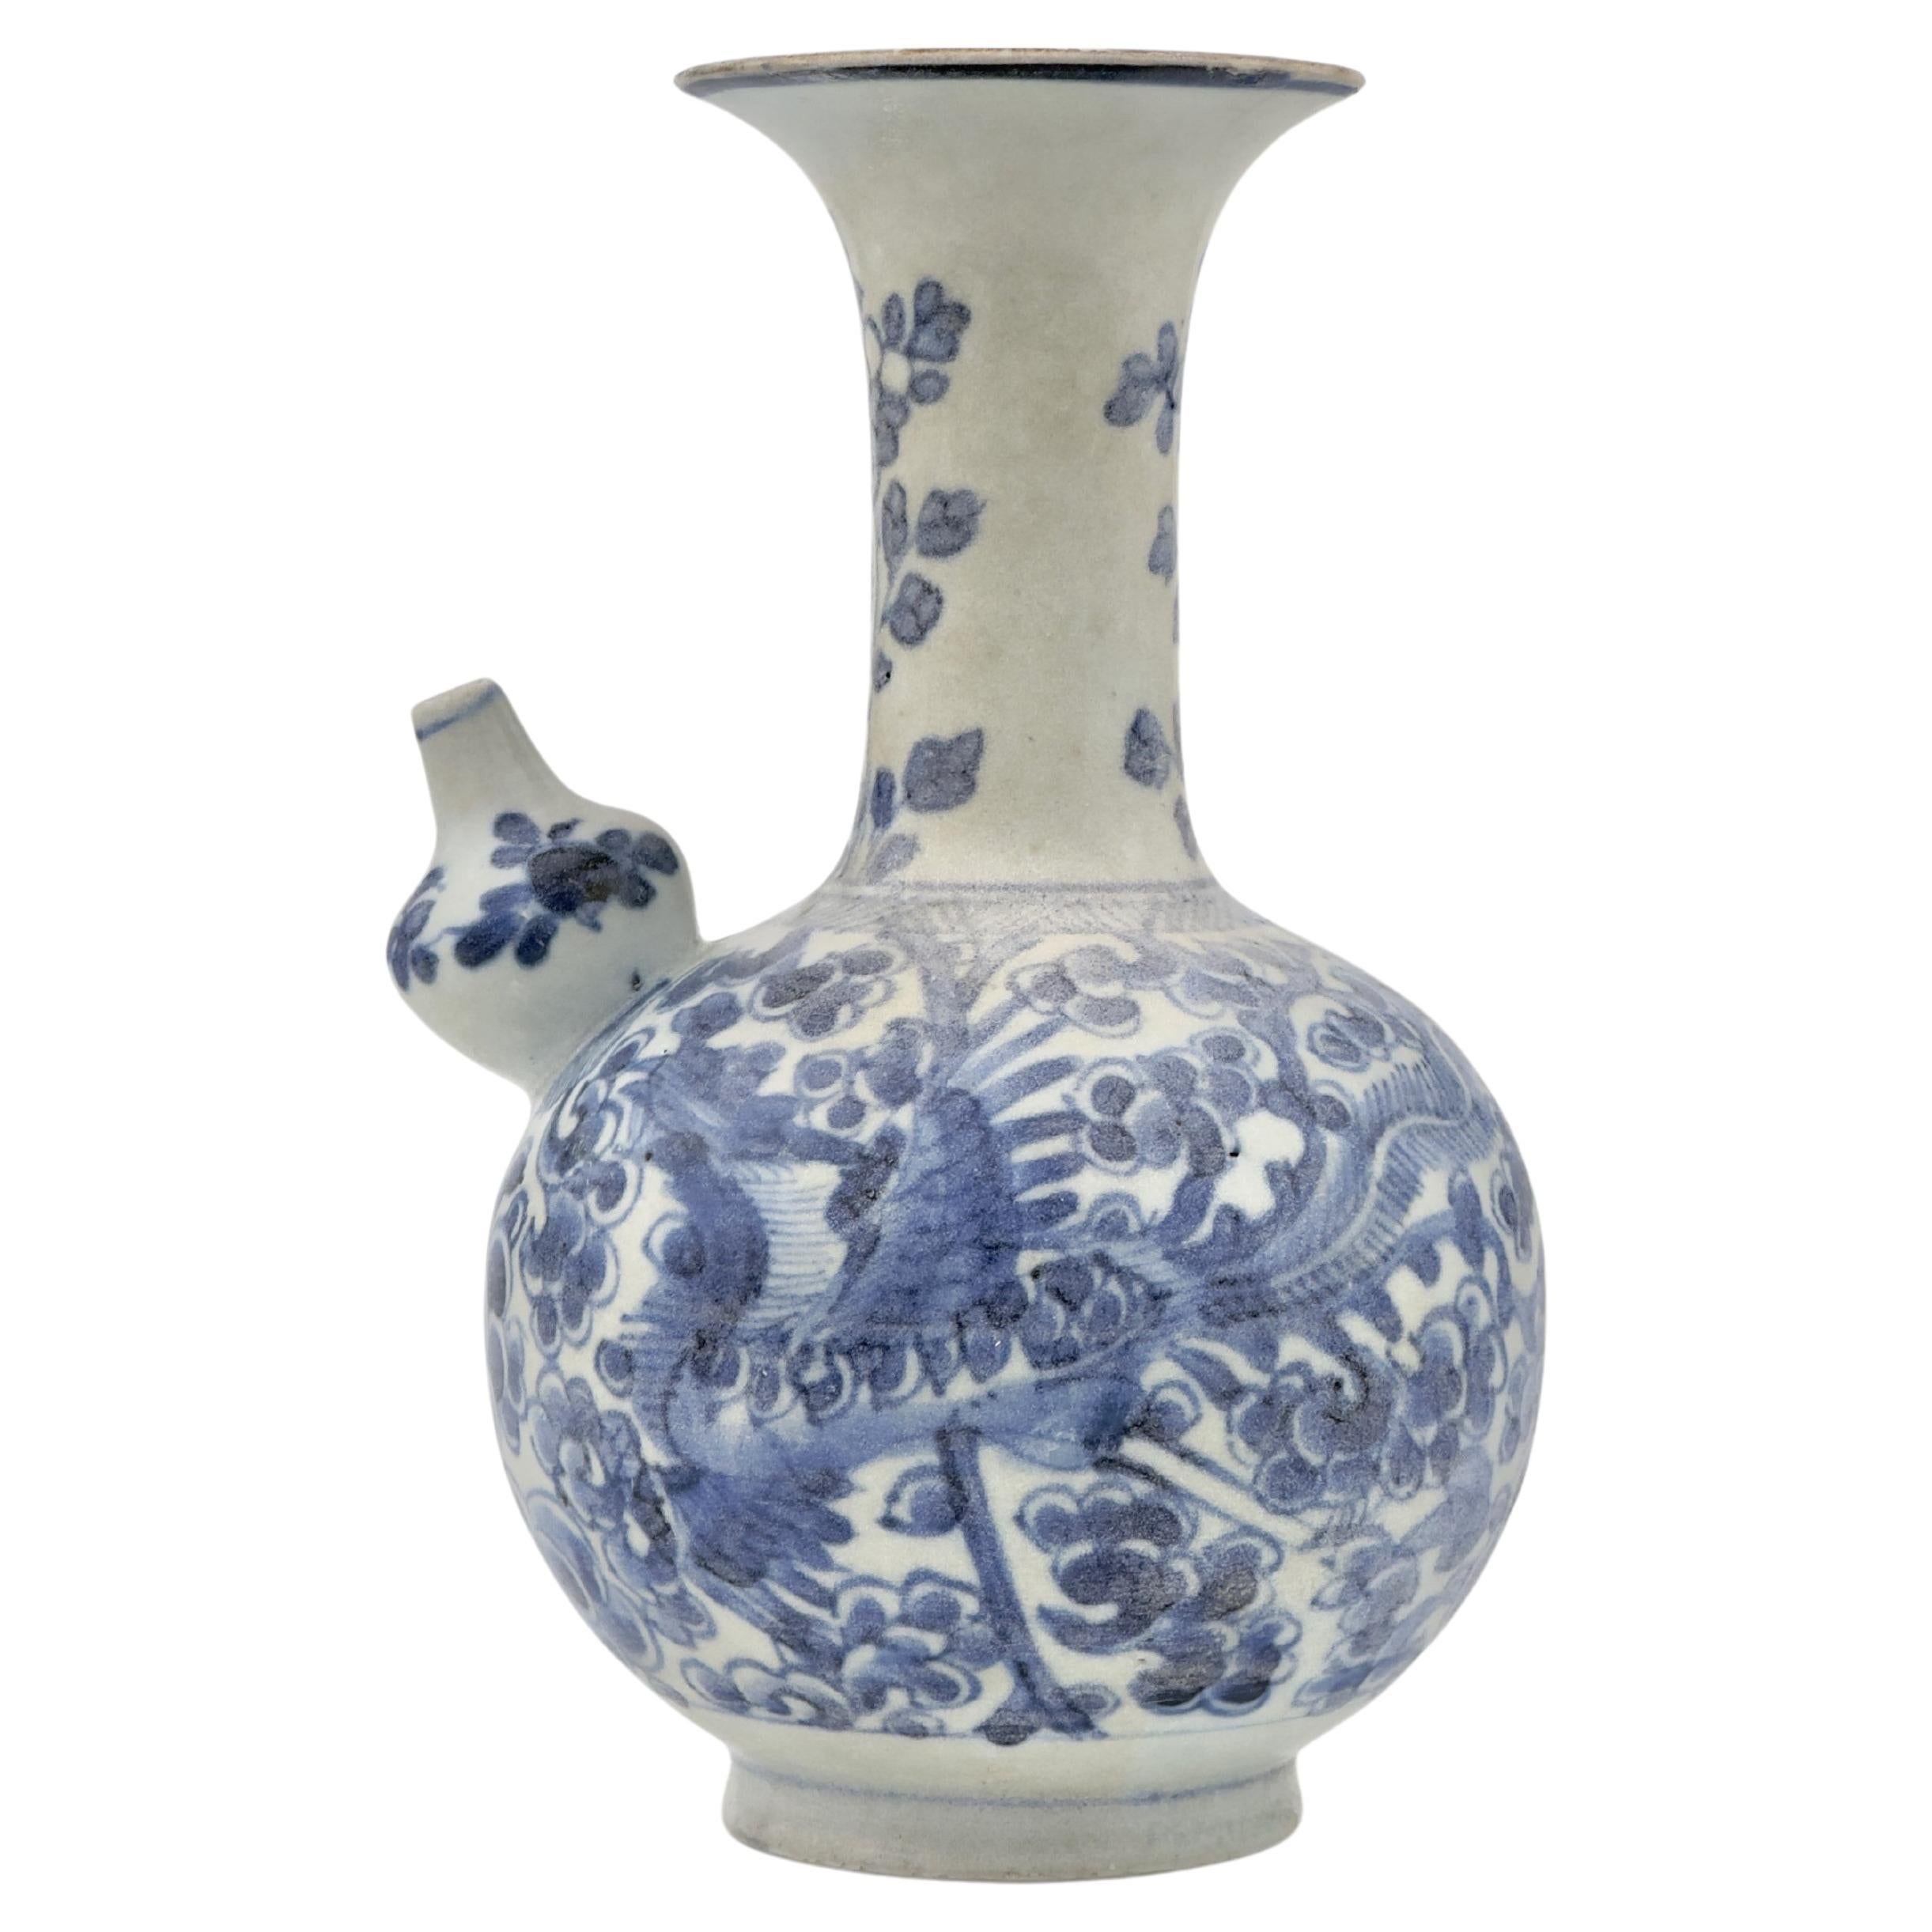 Kendi bleu et blanc, dynastie Qing, période Kangxi, C 1690.